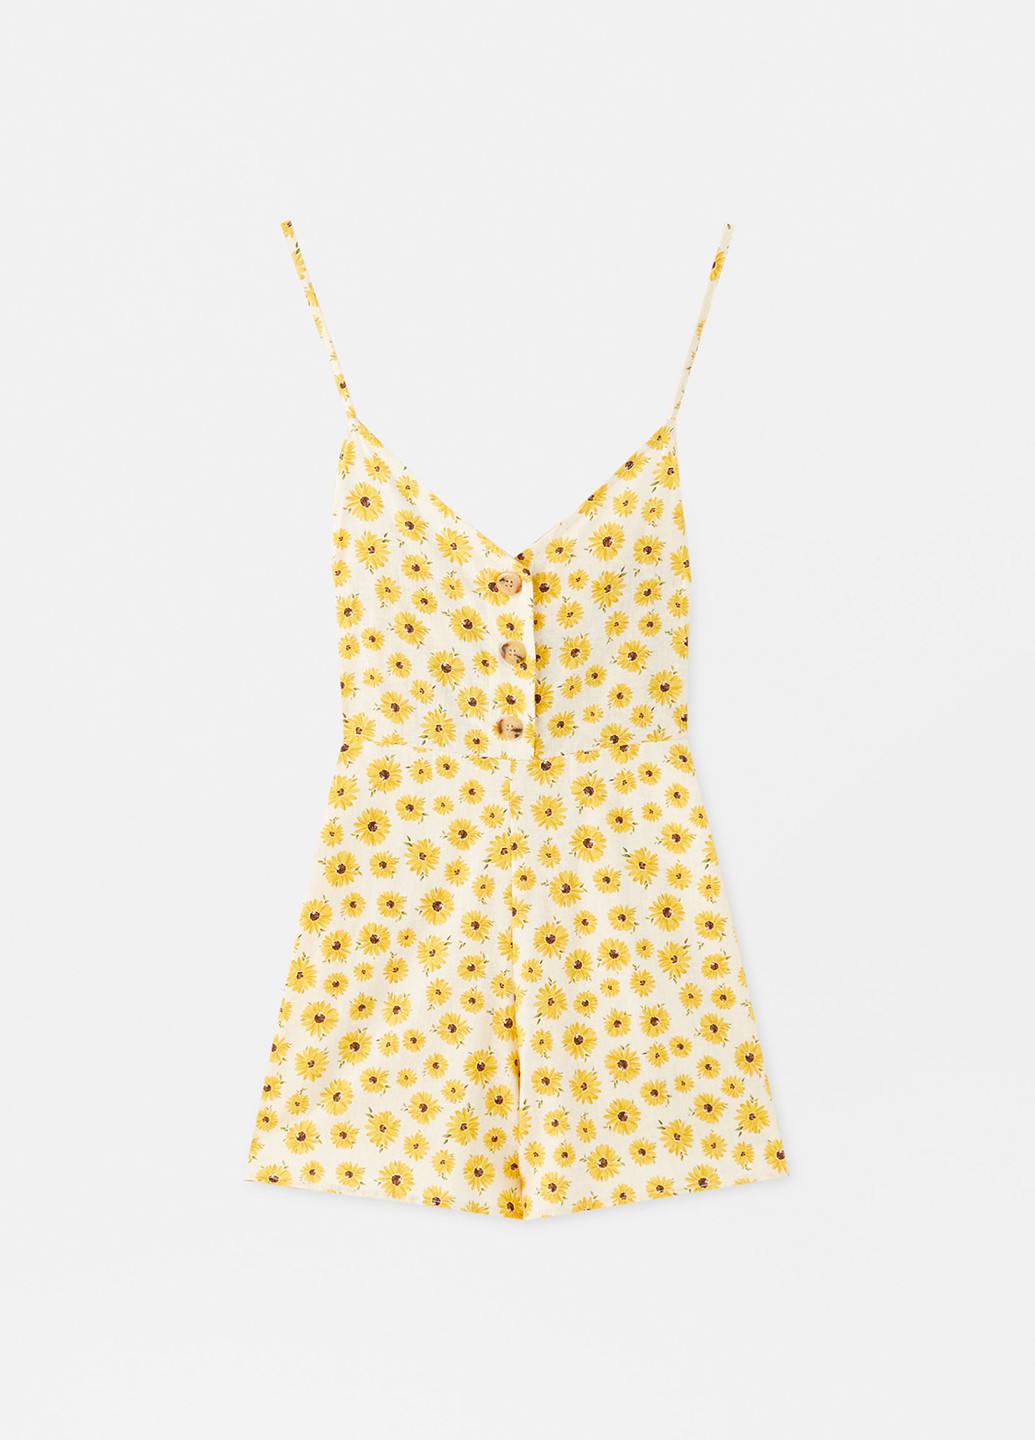 Комбинезон Pull & Bear комбинезон-шорты цветочный светло-жёлтый кэжуал трикотаж, полиэстер, хлопок